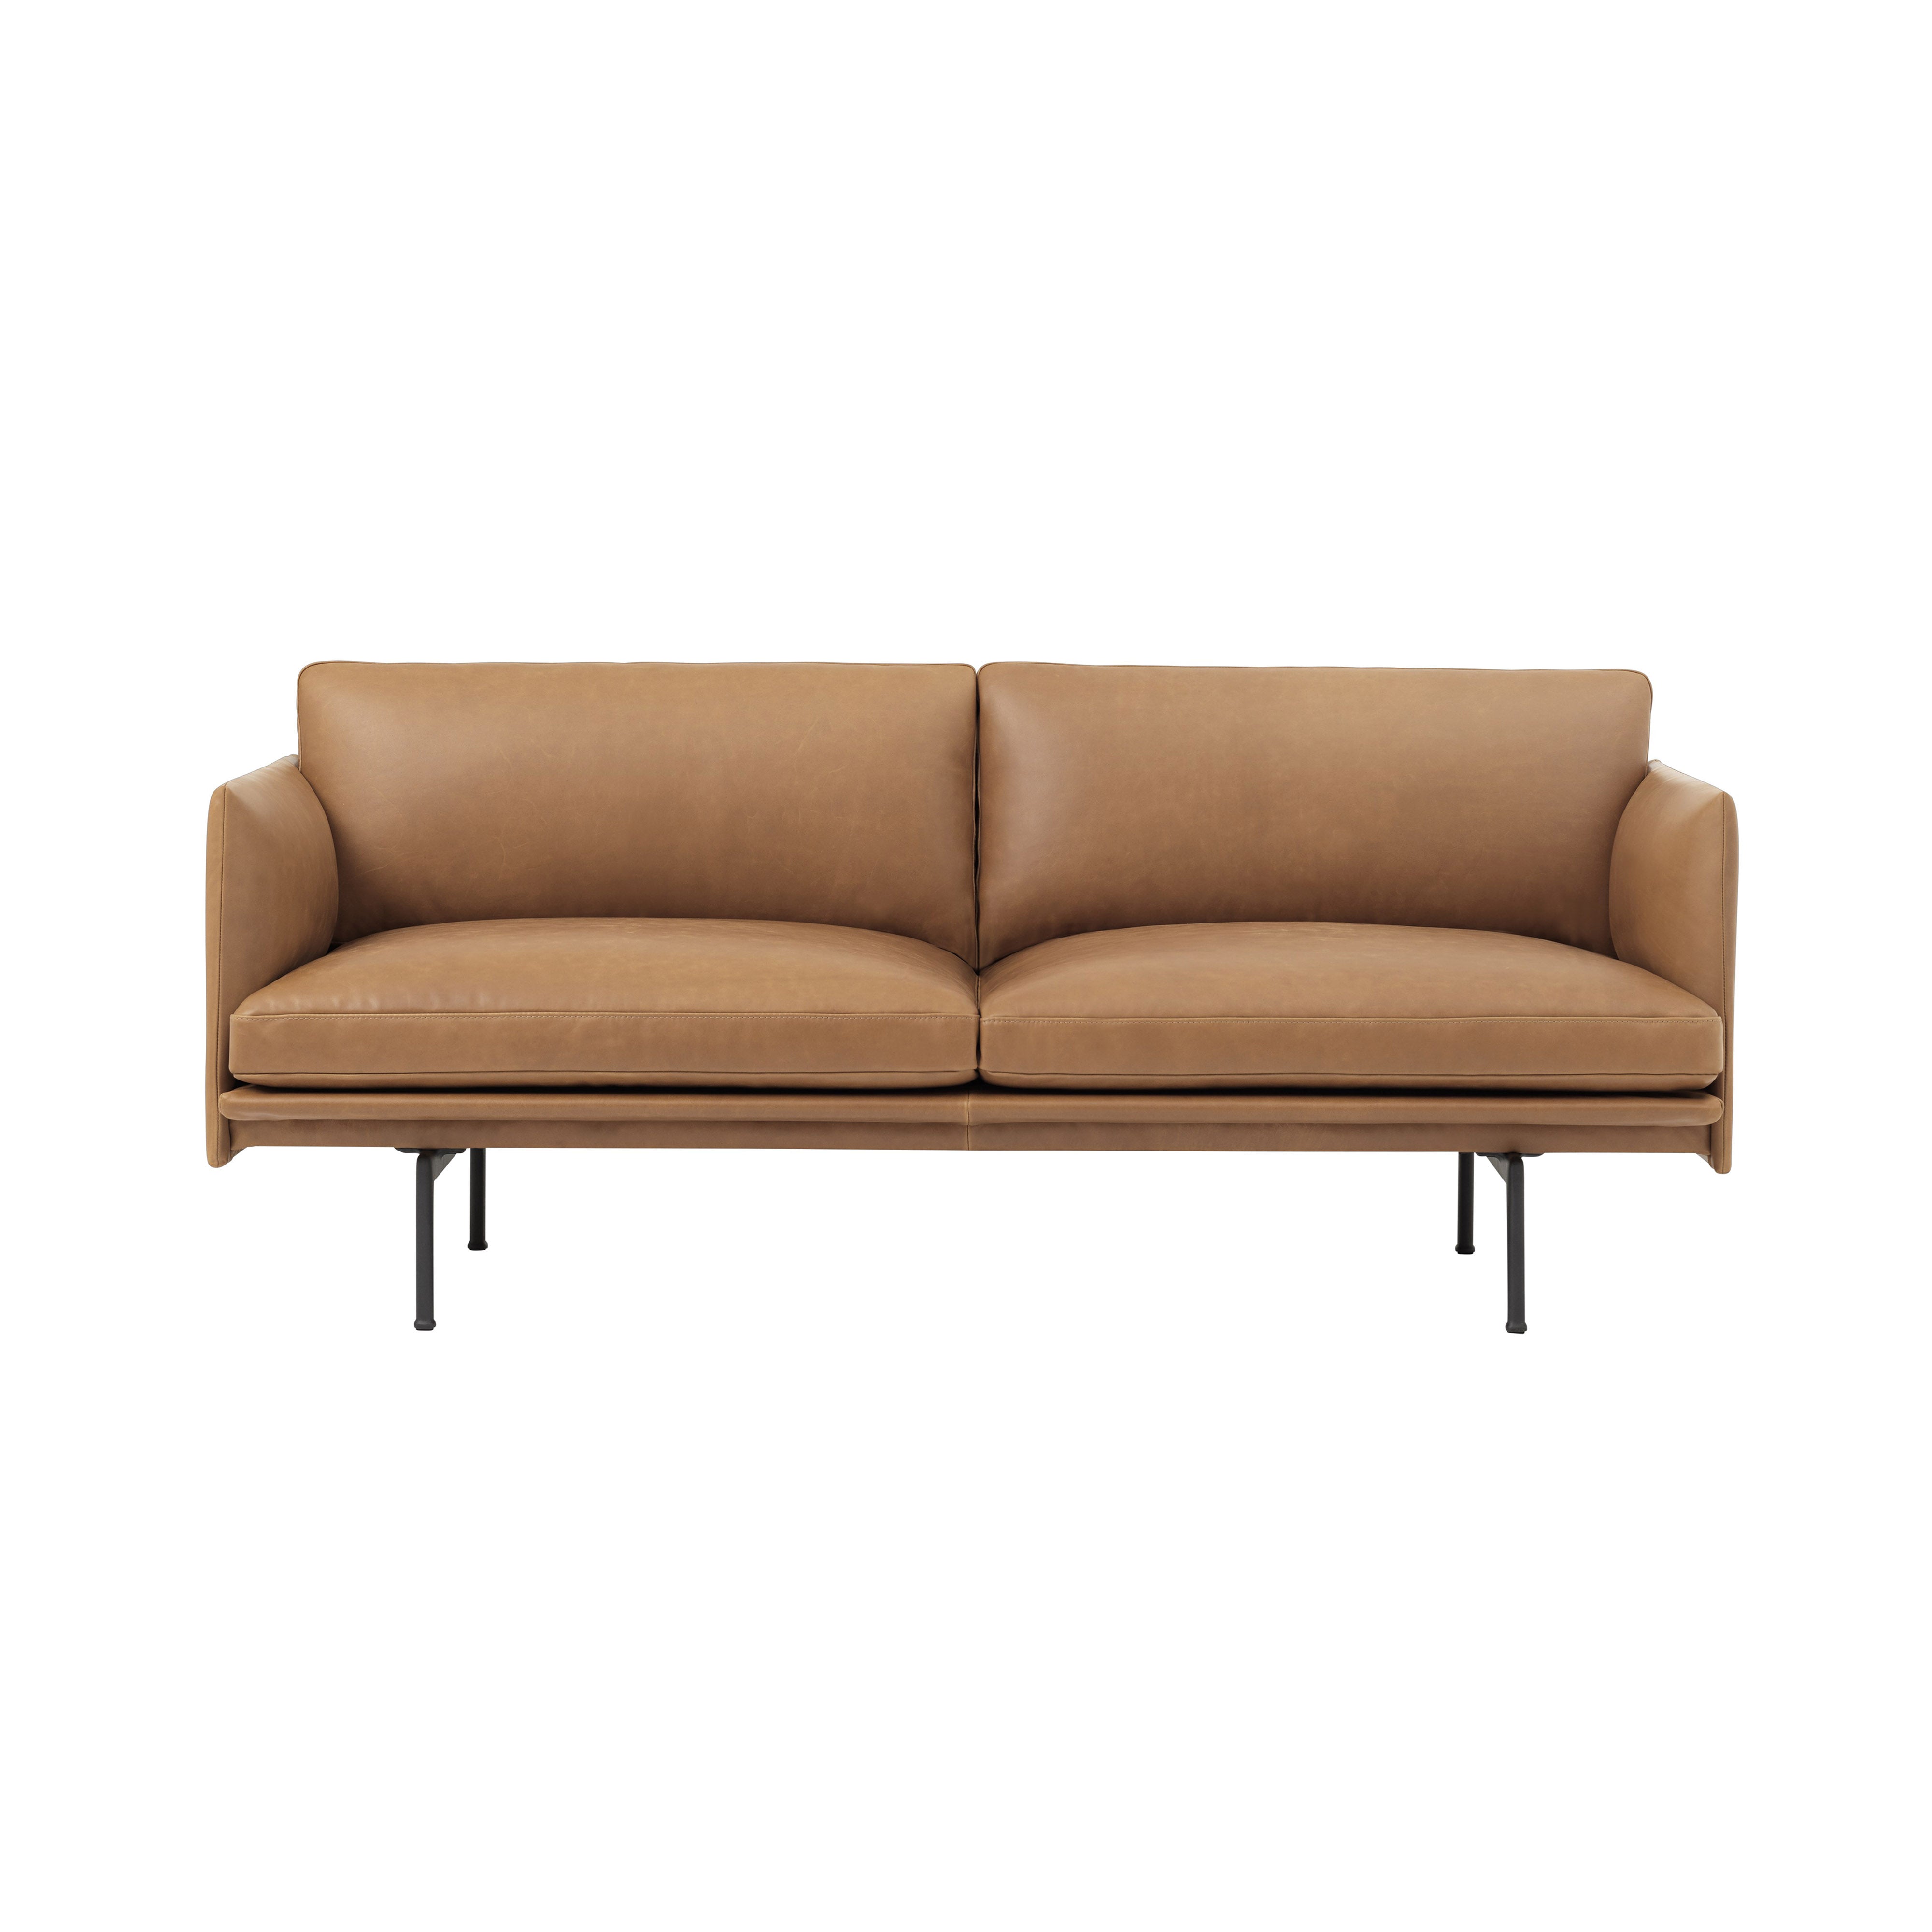 Outline 2-Seater Sofa: Black + Refine Leather Cognac